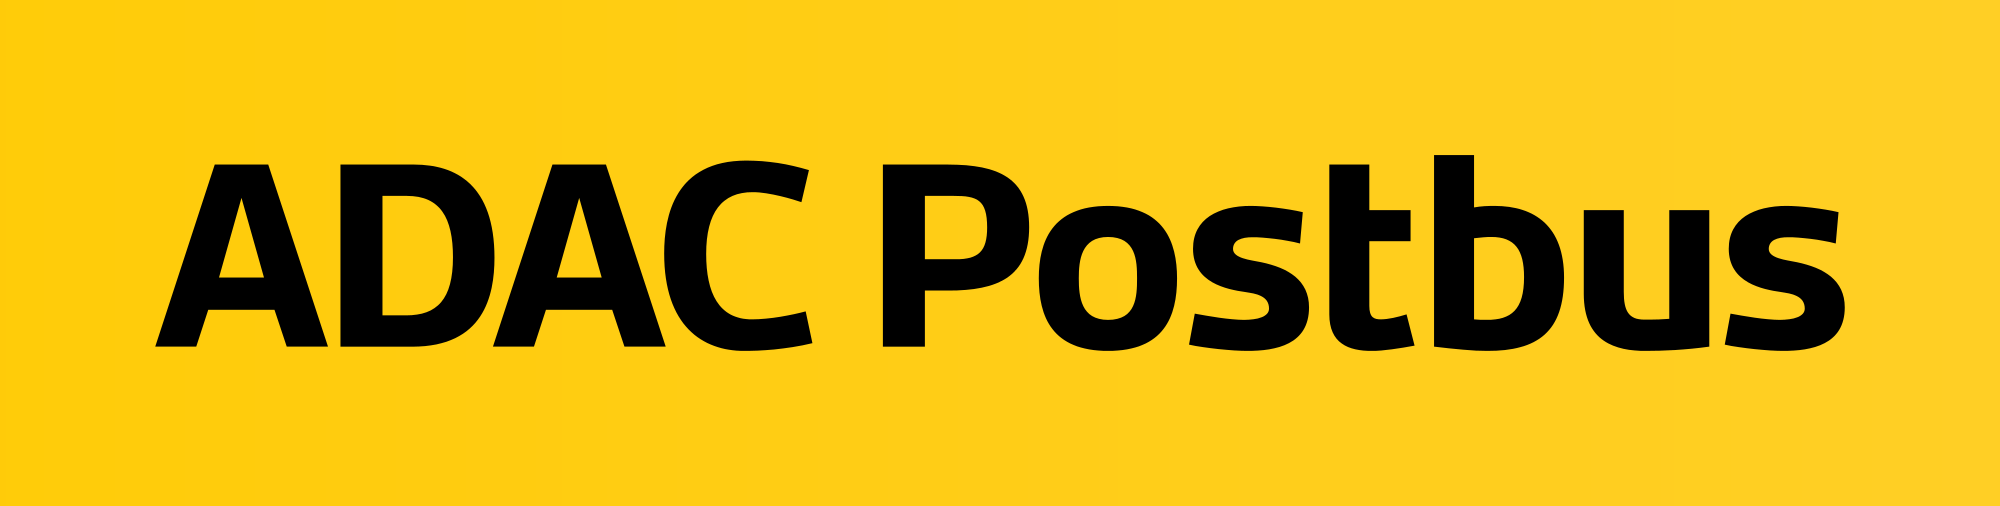 Adac Postbus Logo   Adac Logo Vector Png - Adac Vector, Transparent background PNG HD thumbnail